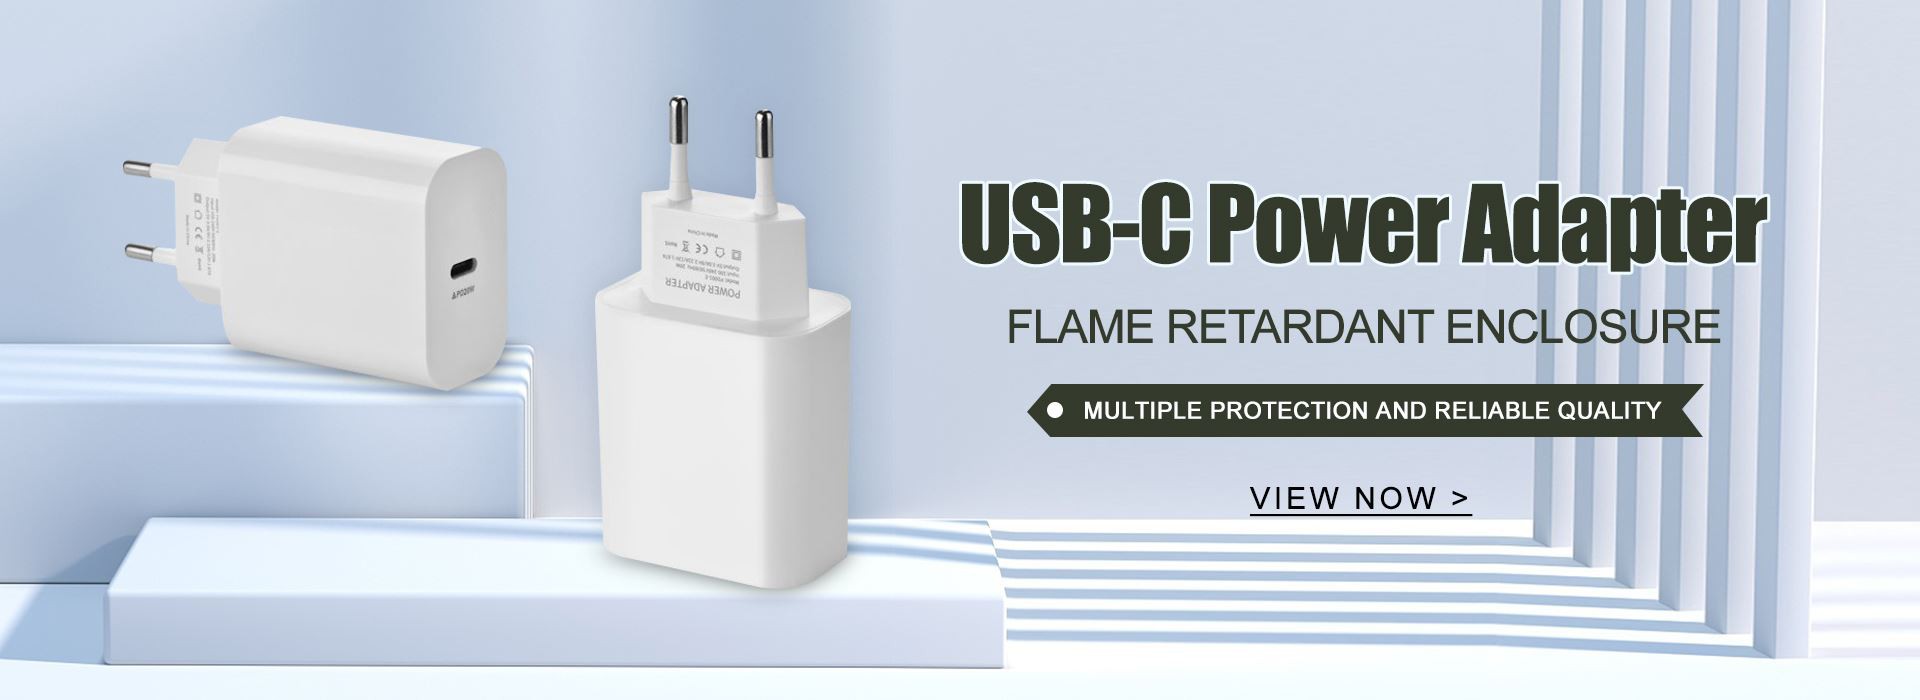 USB-C PowerAdapter